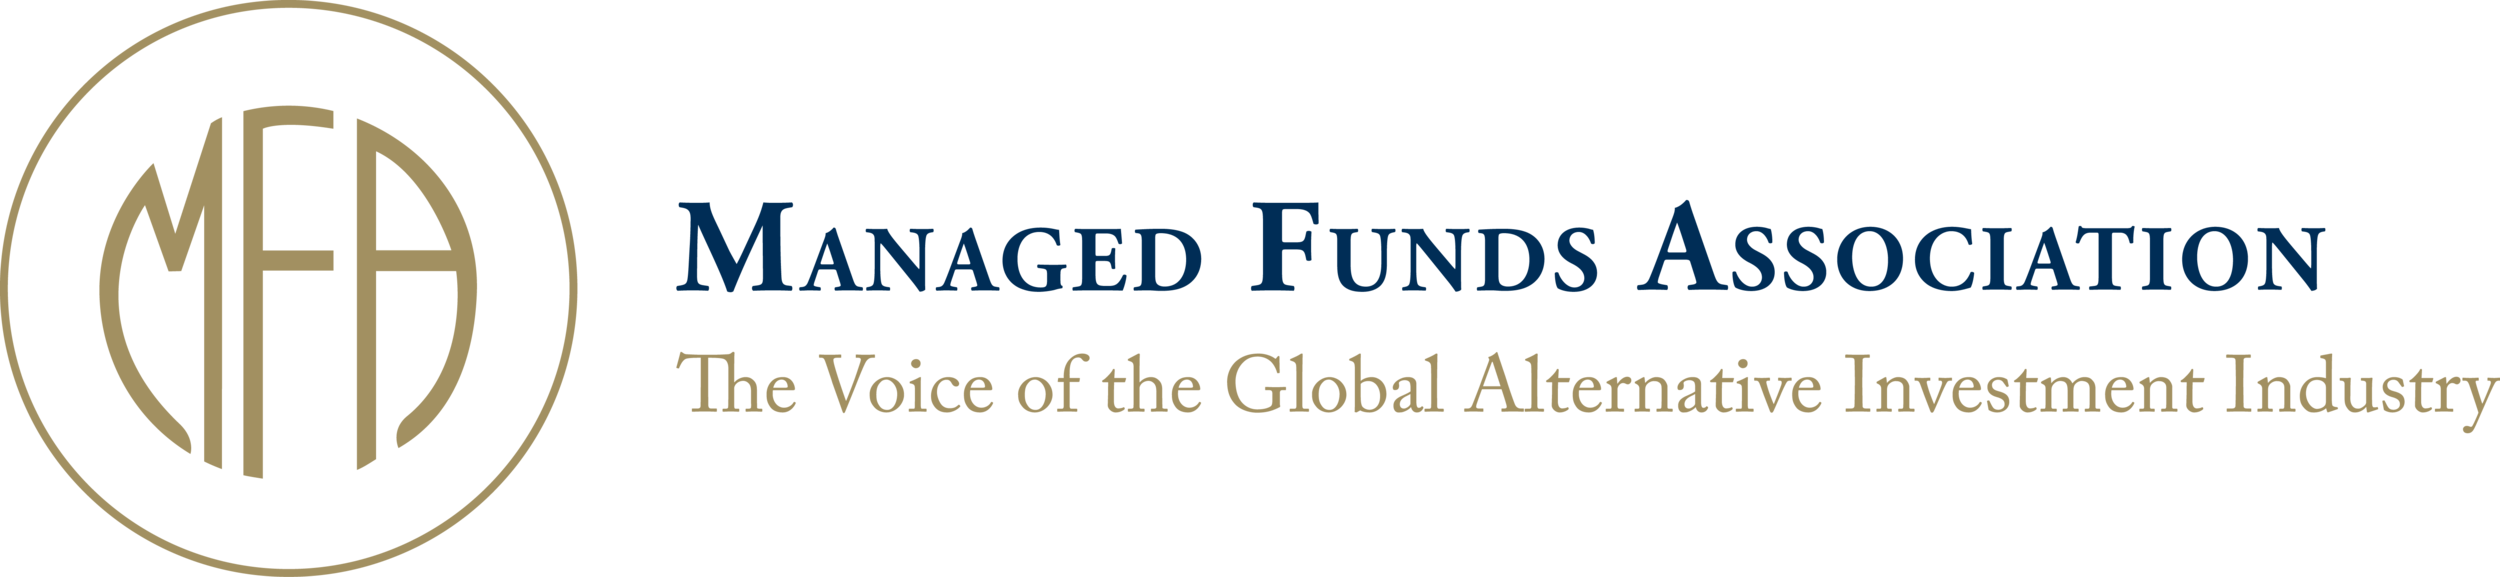 Managed Funds Association.png